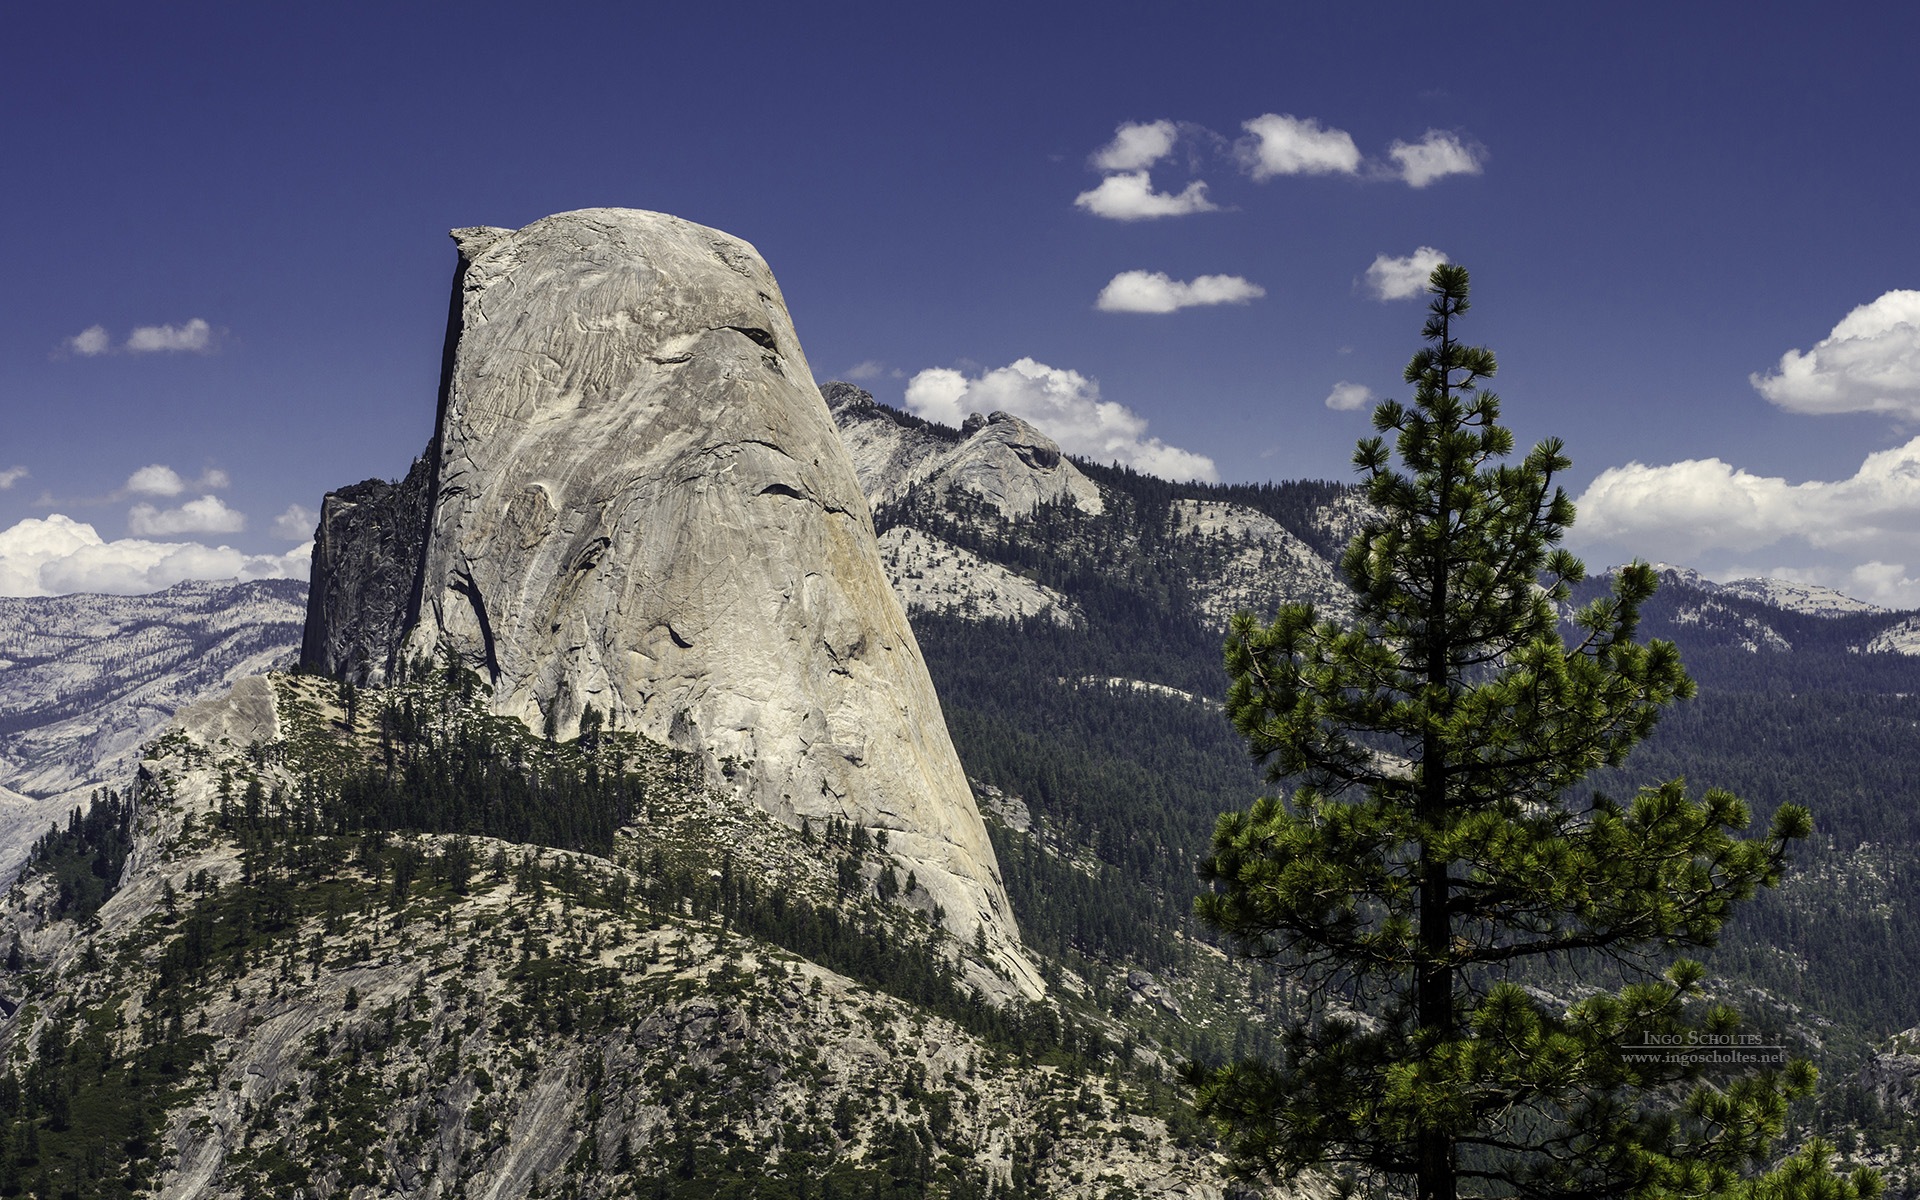 Windows 8 Thema, Yosemite National Park HD Wallpaper #13 - 1920x1200